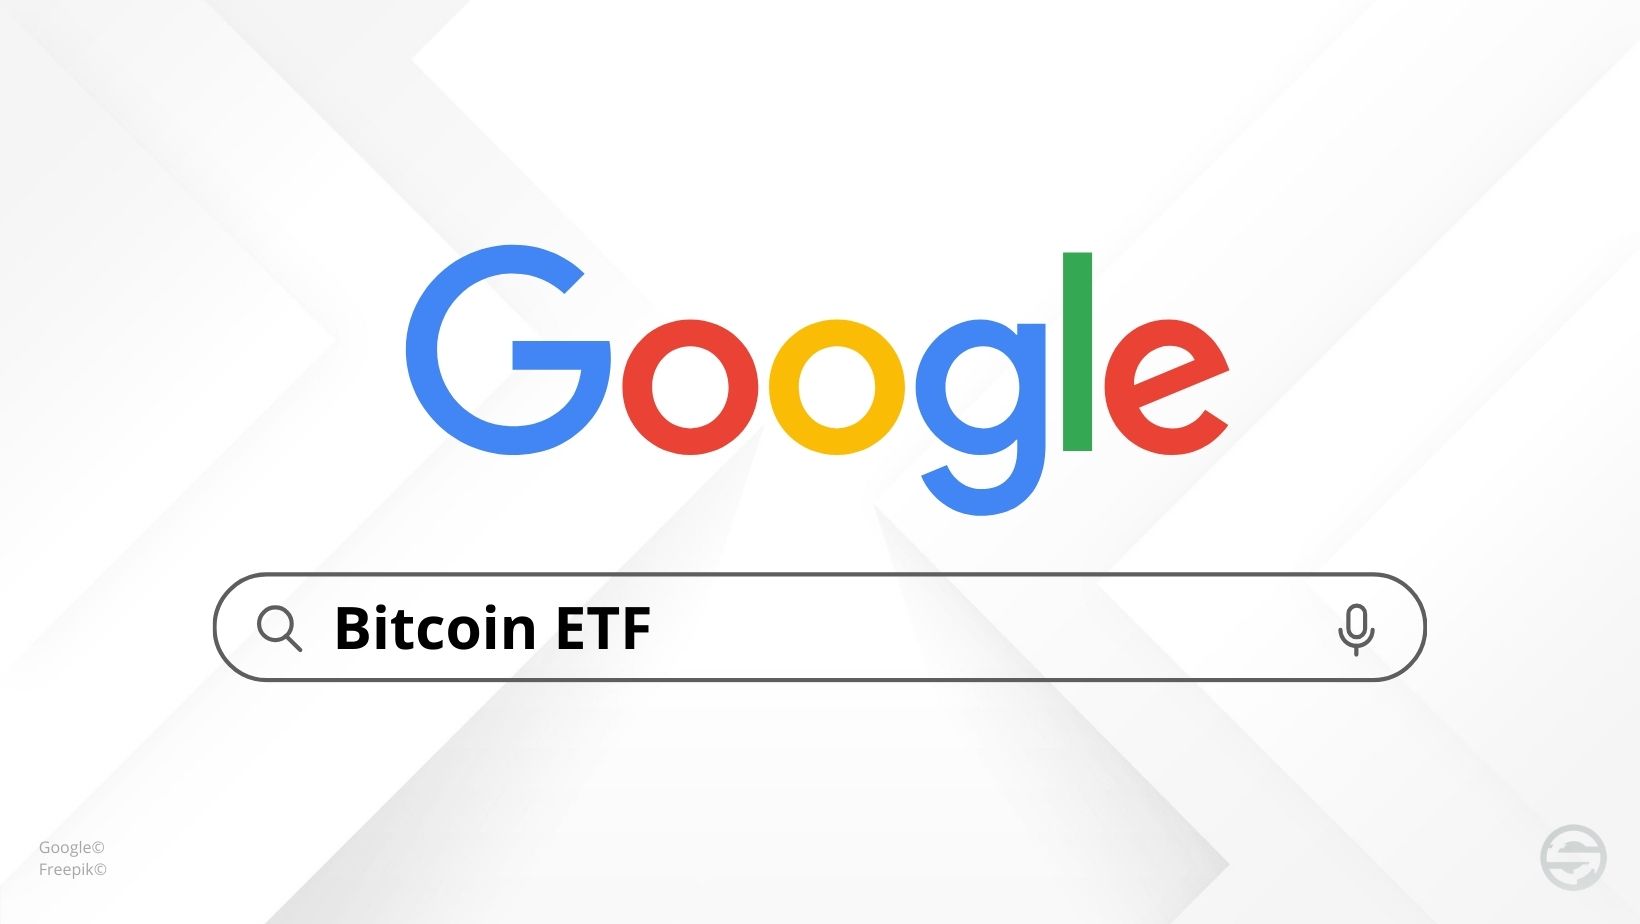 Bitcoin ETFs allowed to advertise on Google